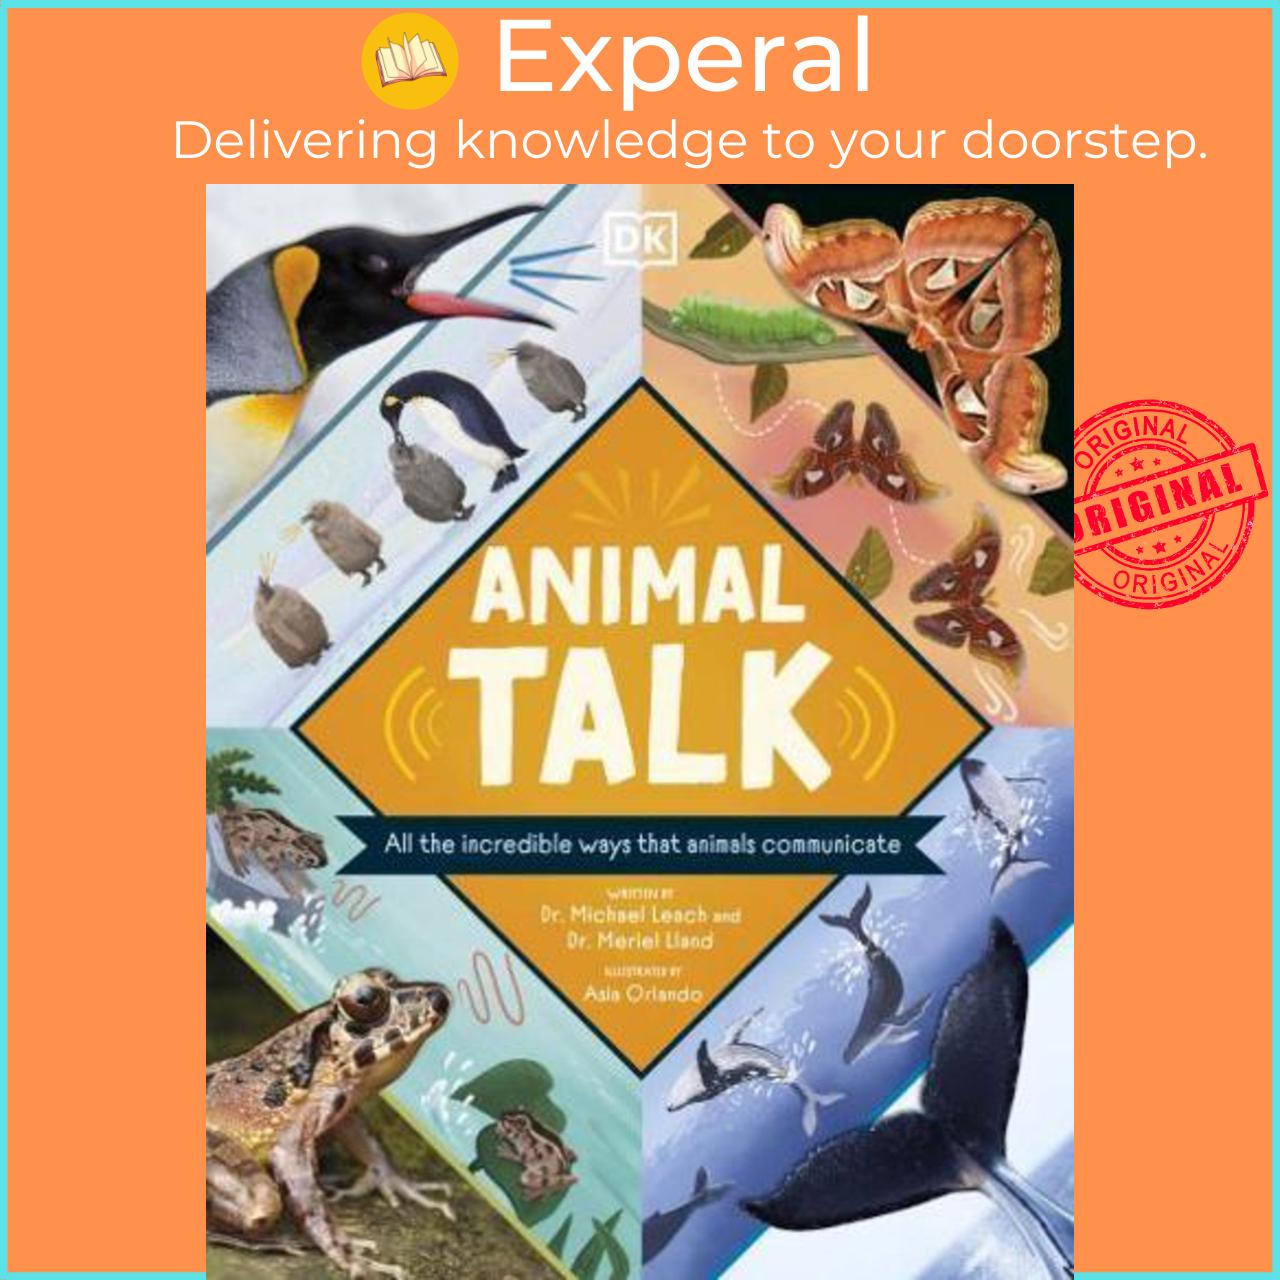 Sách - Animal Talk All by Michael Leach (author),Meriel Lland (author),Asia Orlando (illustrator) (UK edition, Hardback)